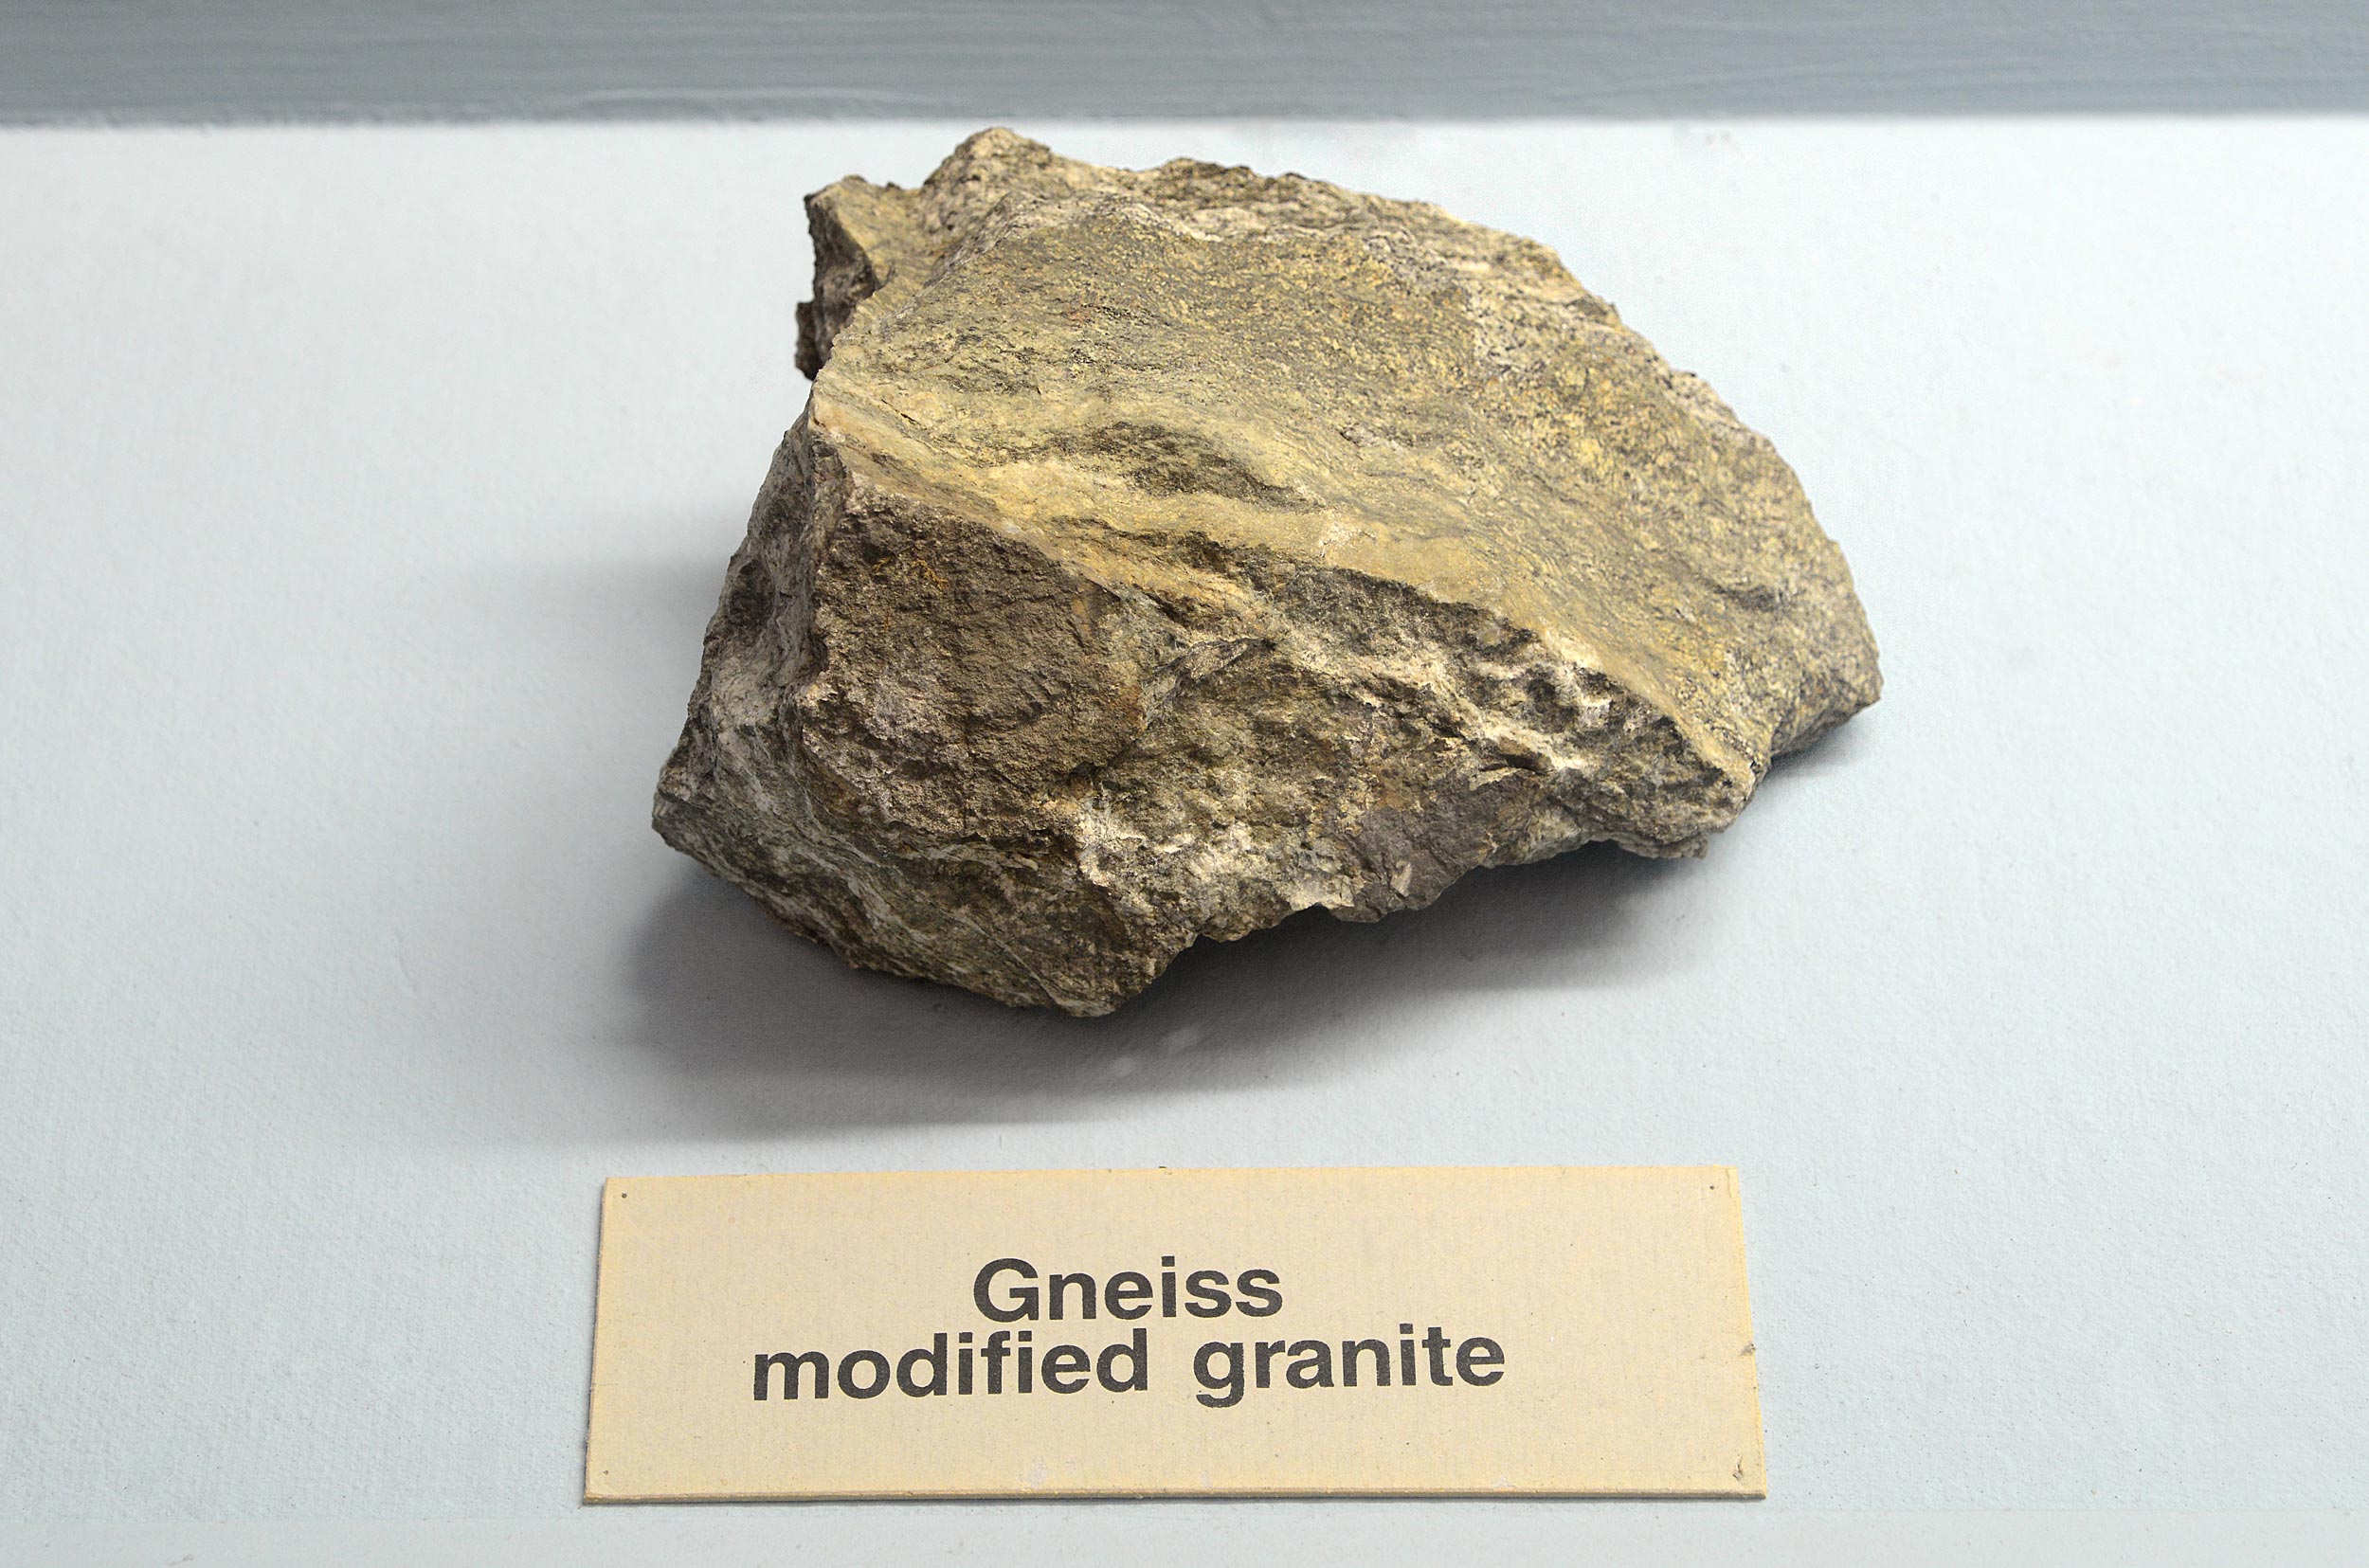 Gneiss modified granite in museum case